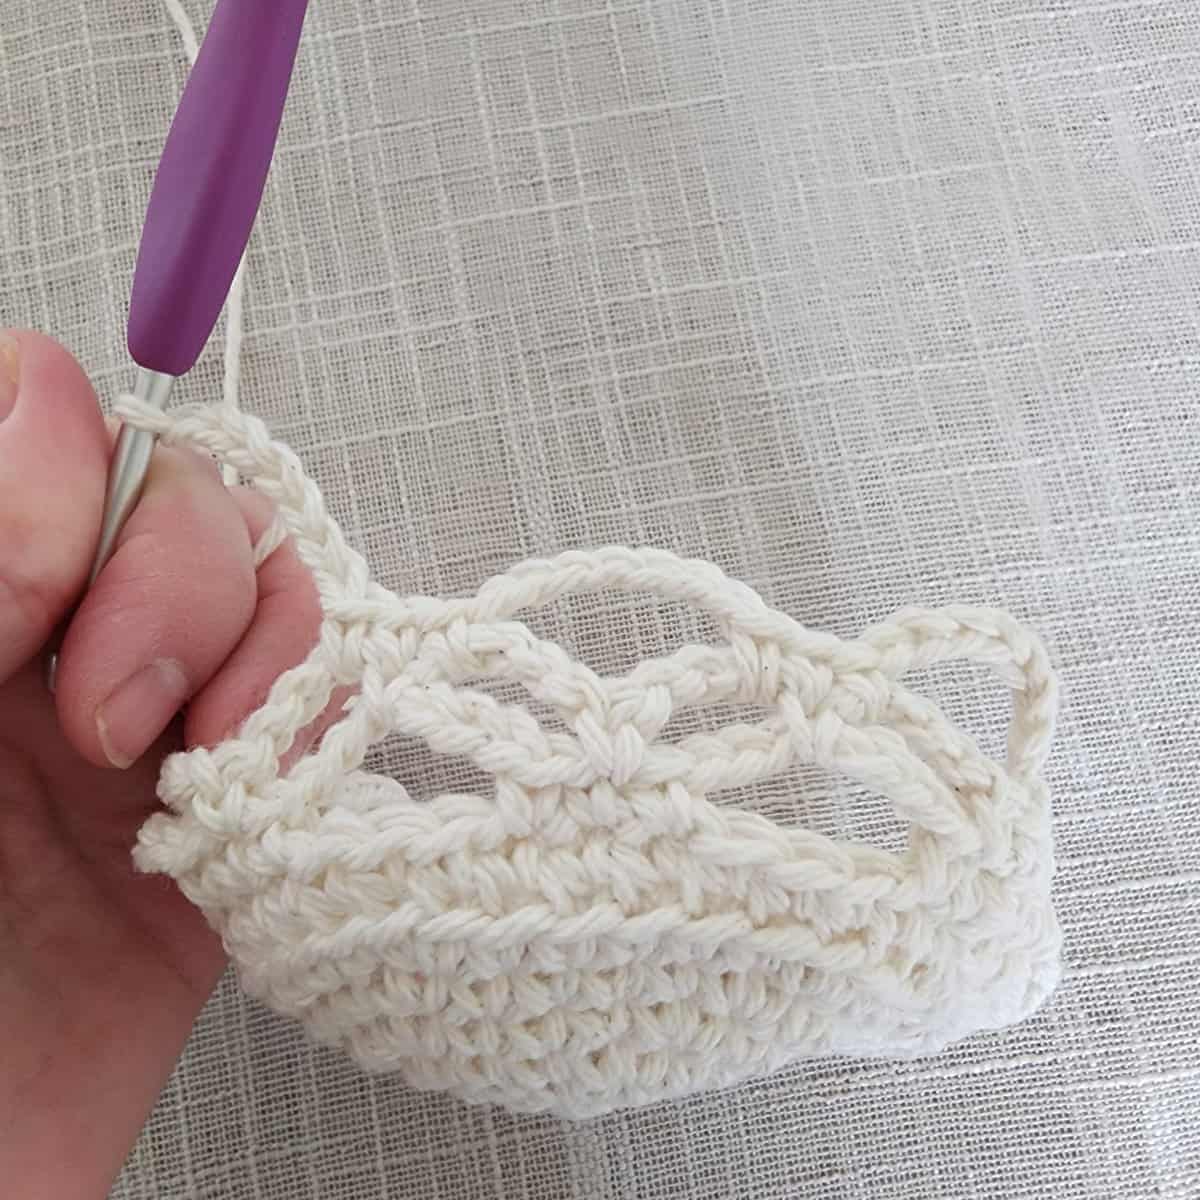 Progress of crochet lace stitch pattern and purple crochet hook.